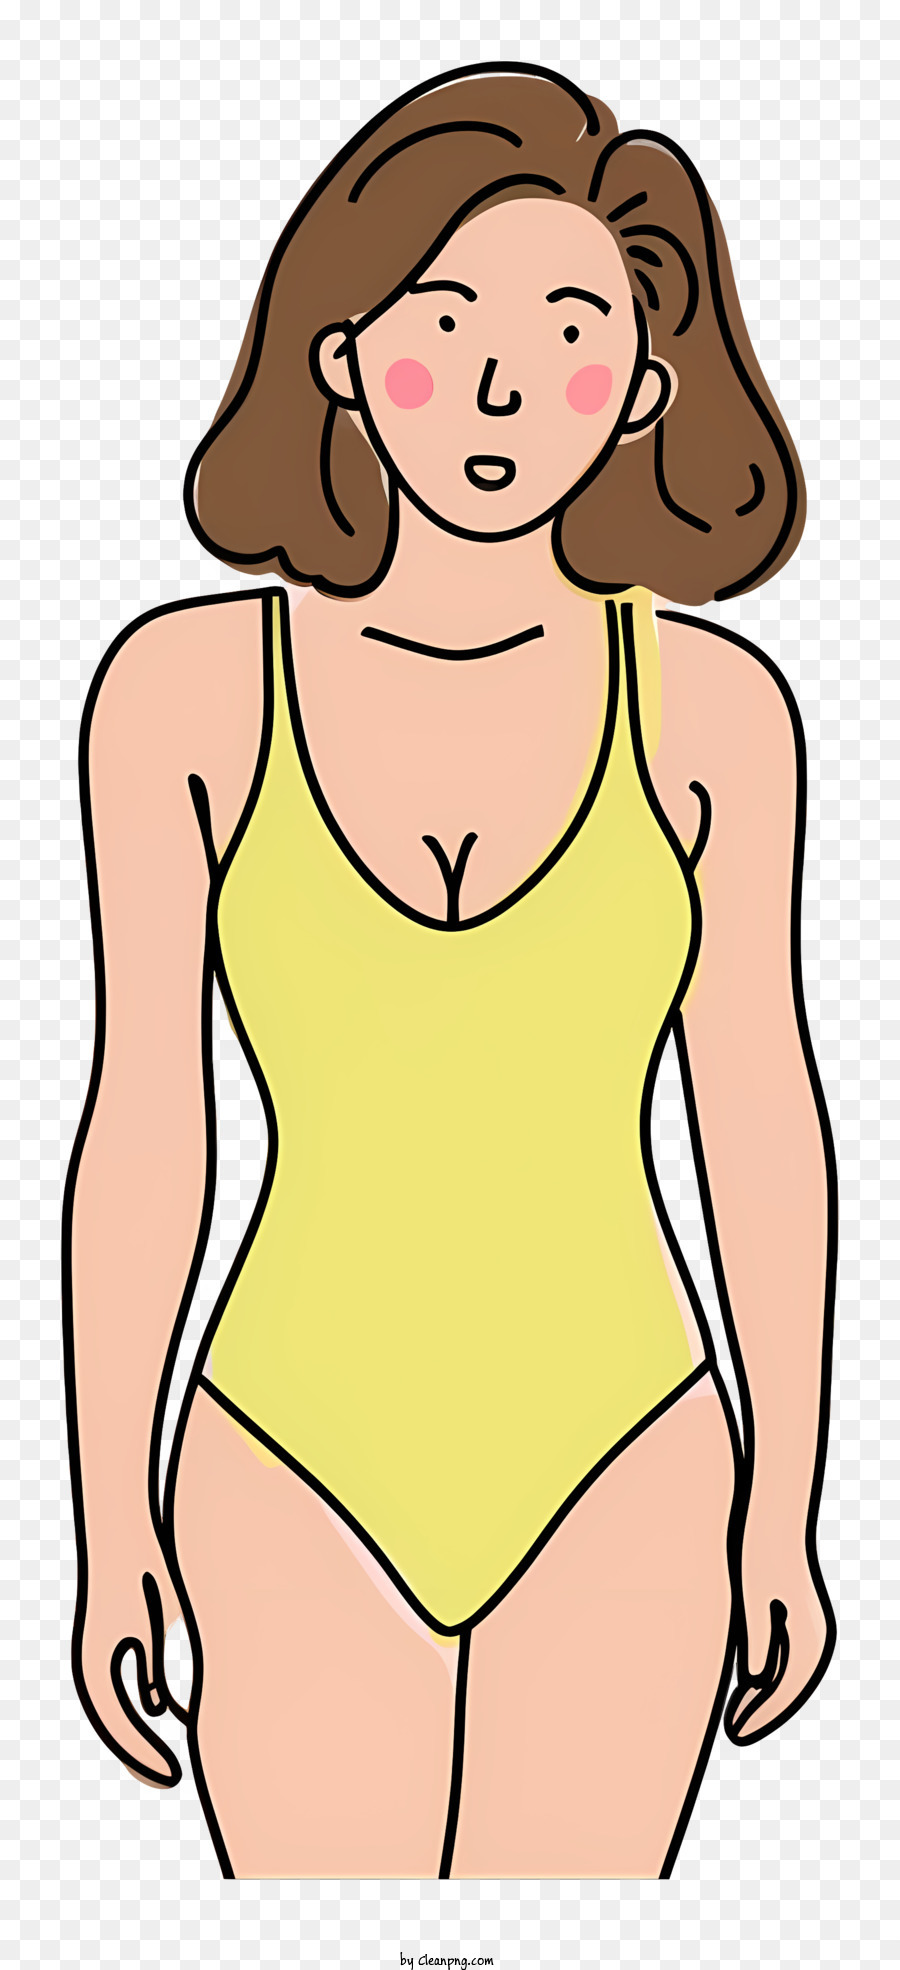 Woman in yellow bikini with slender body png download - 1812*3904